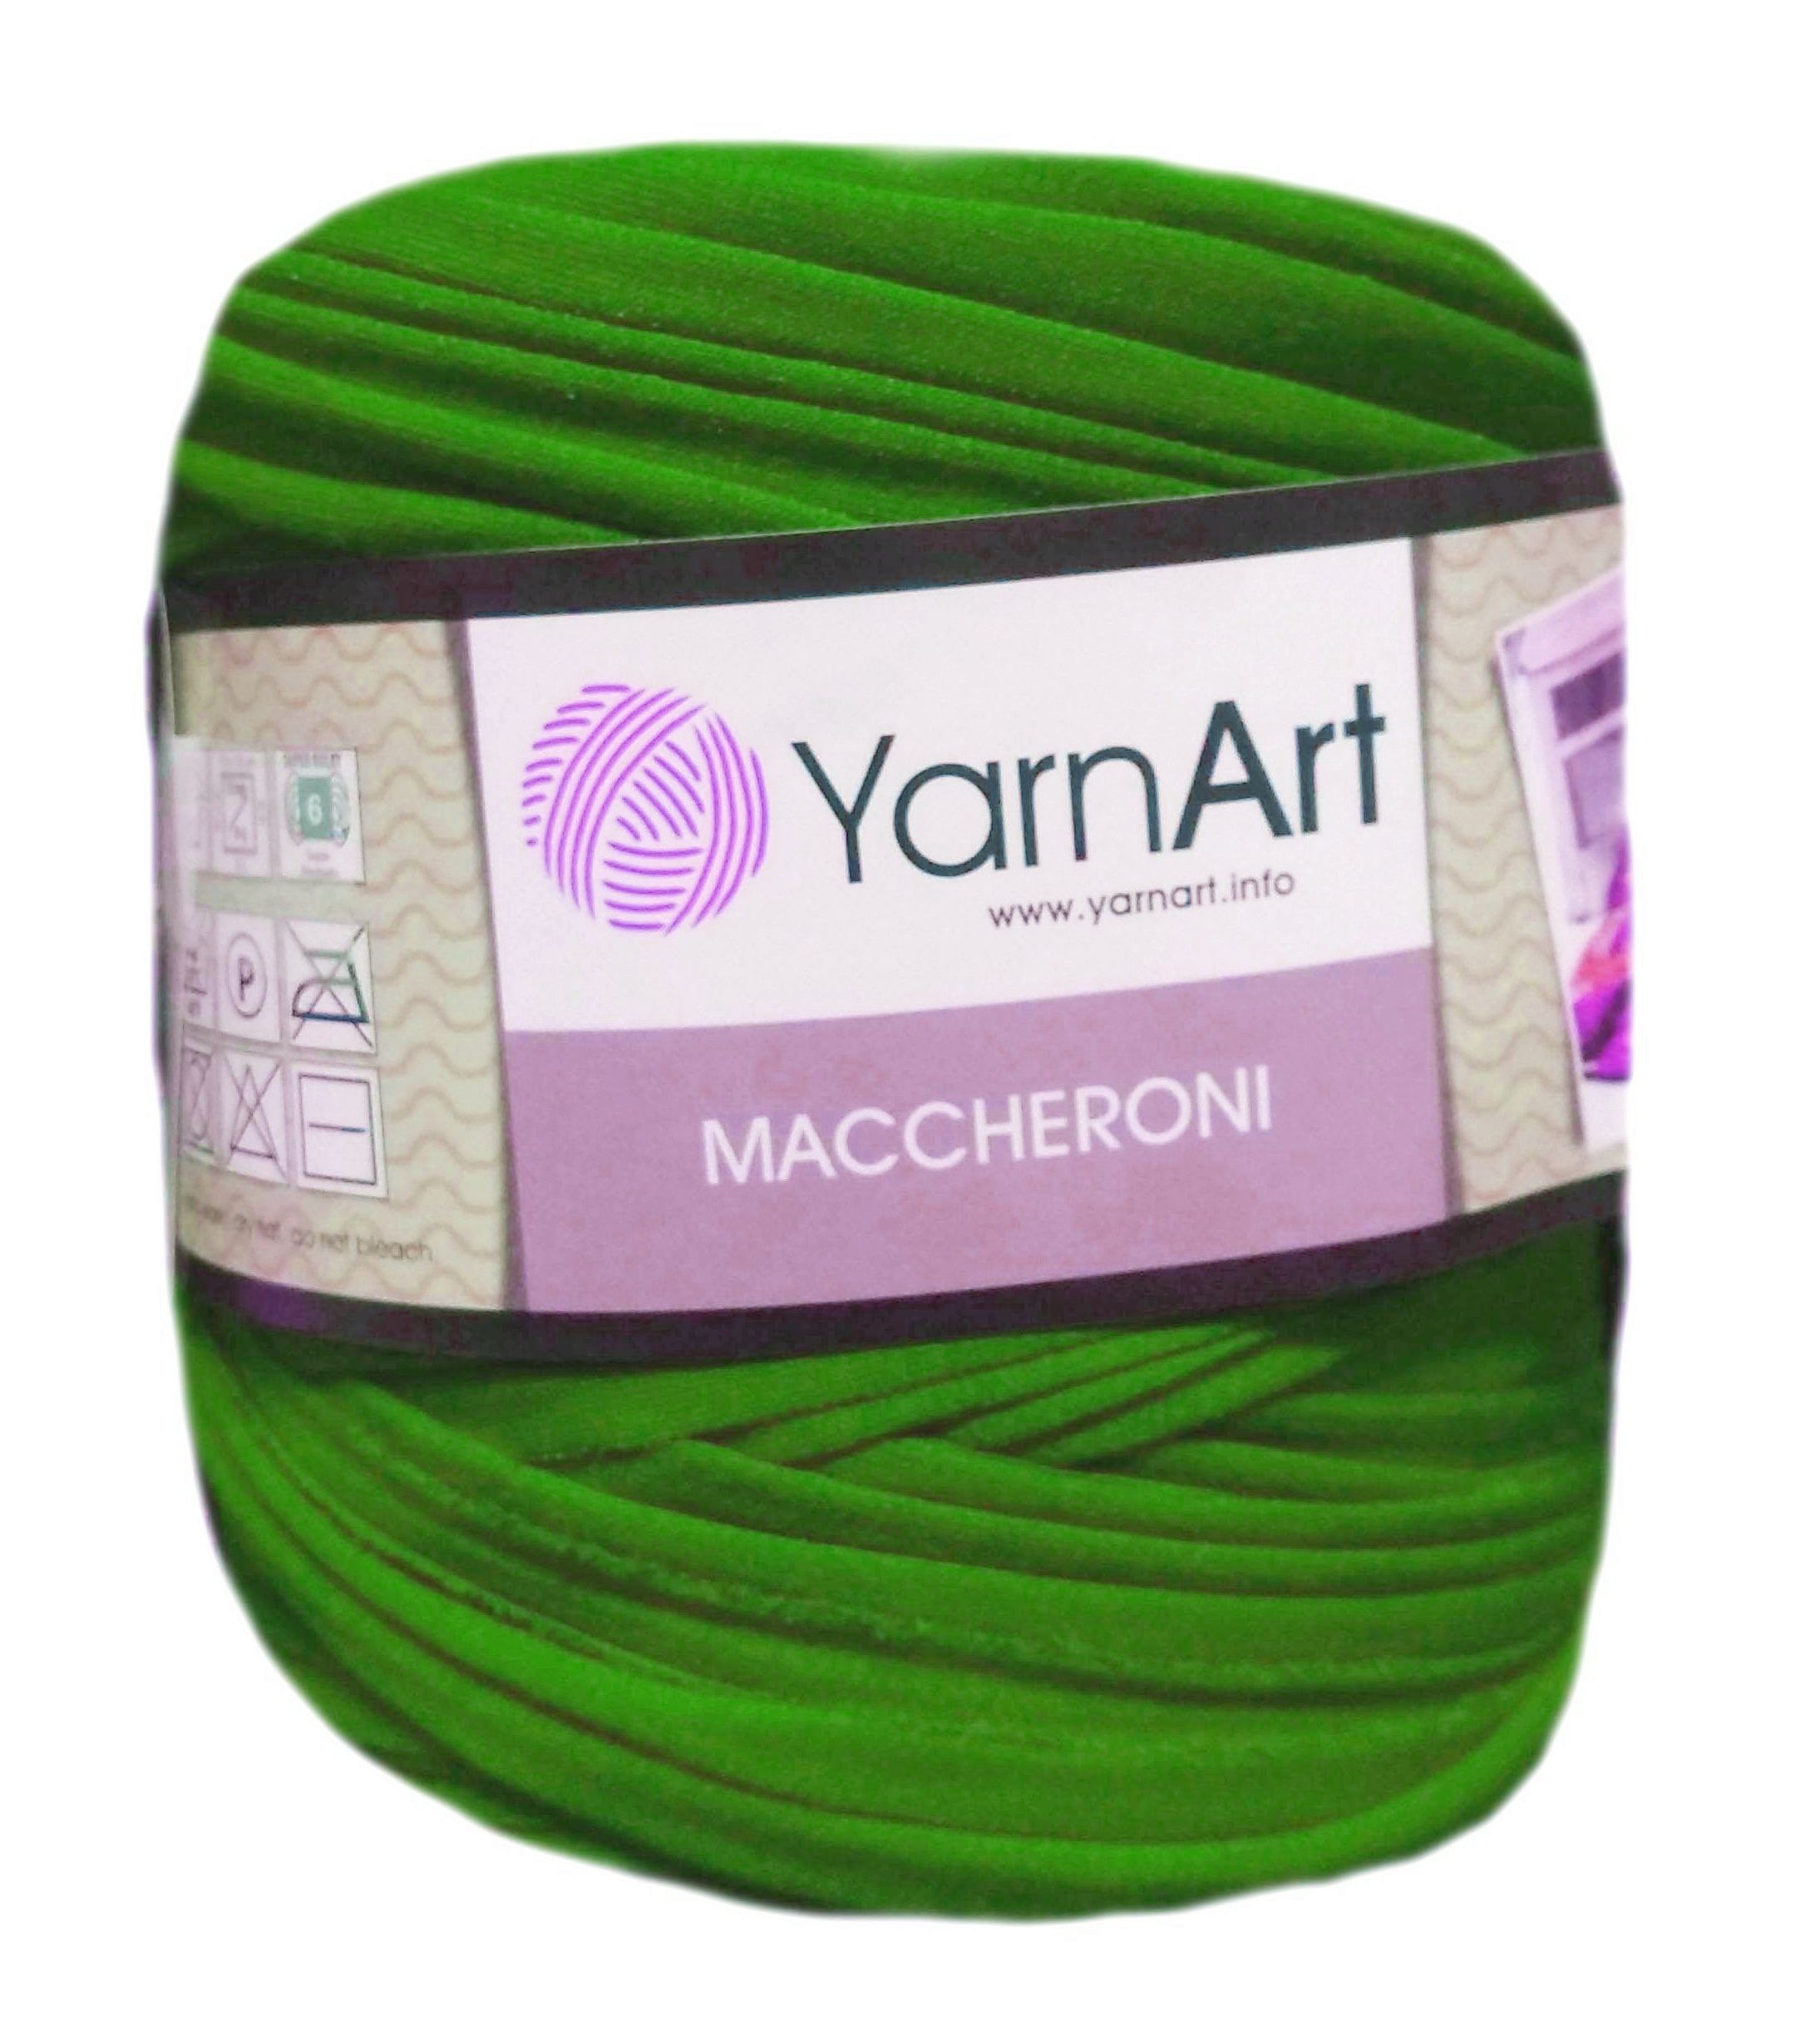 YarnArt MACCHERONI, zöld póló fonal.Tű 12-15 mm.